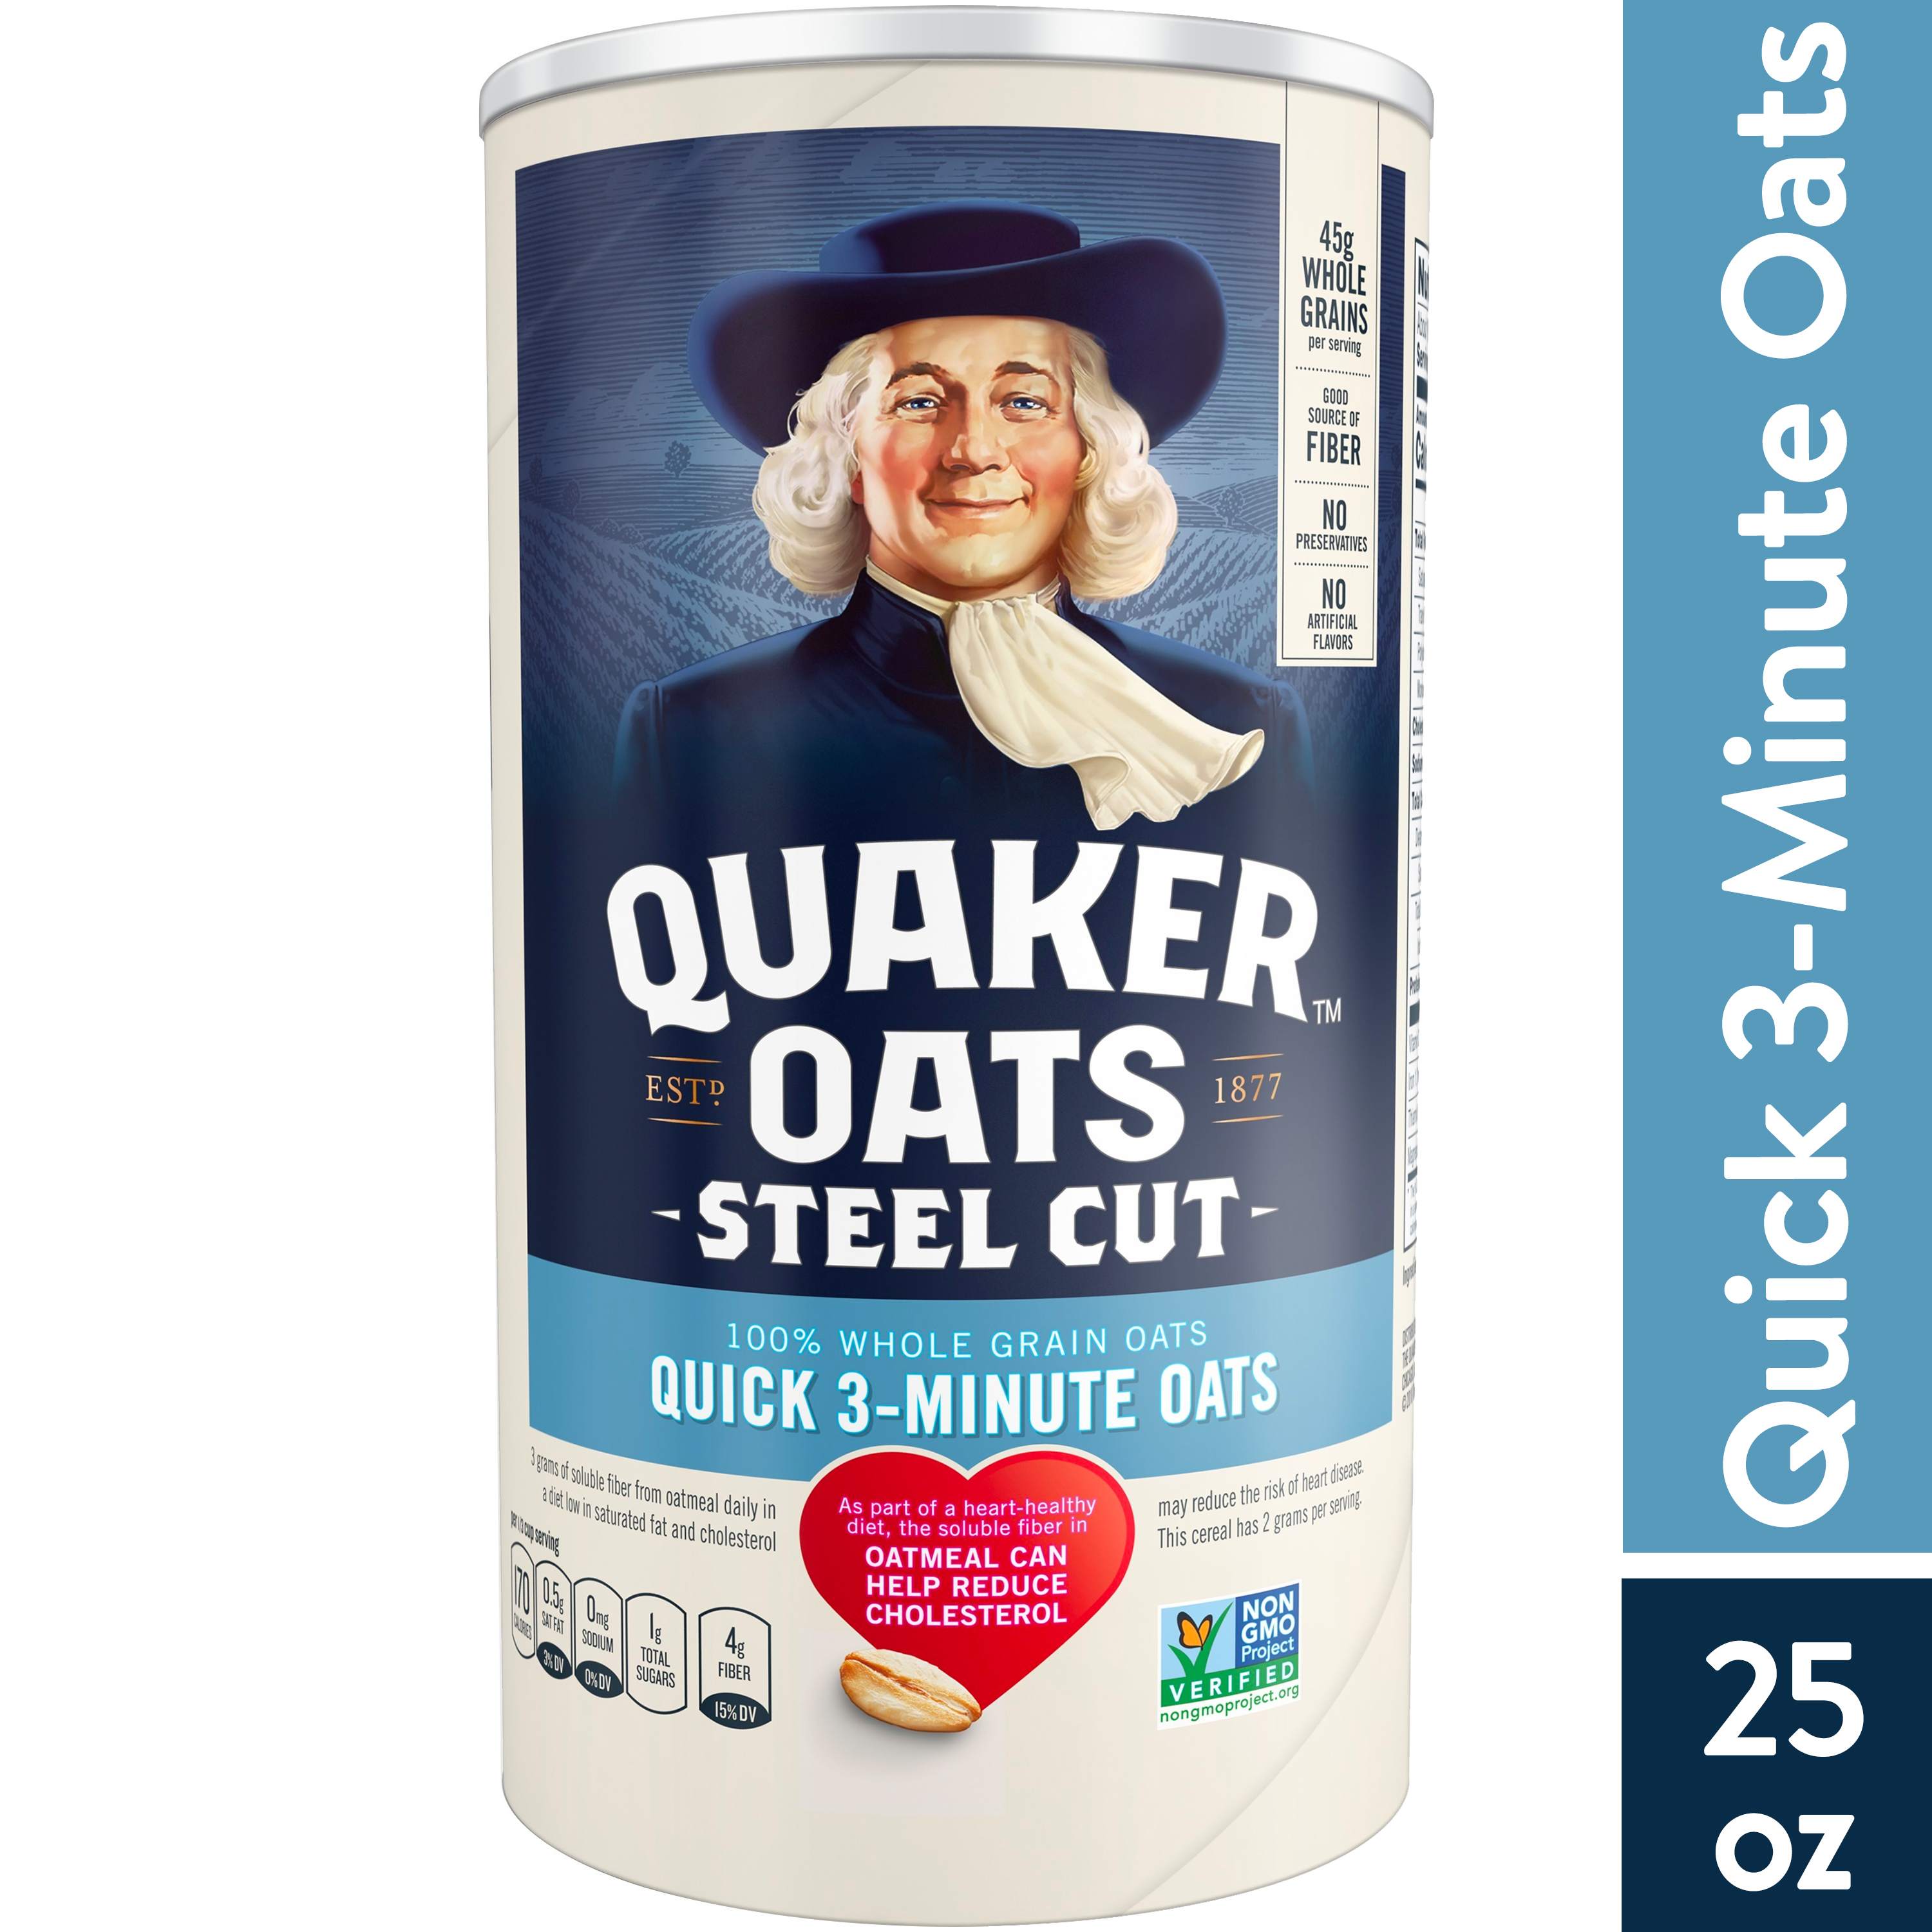 Quaker, Steel Cut Quick 3 Minute Oats, Oatmeal, 25 Oz